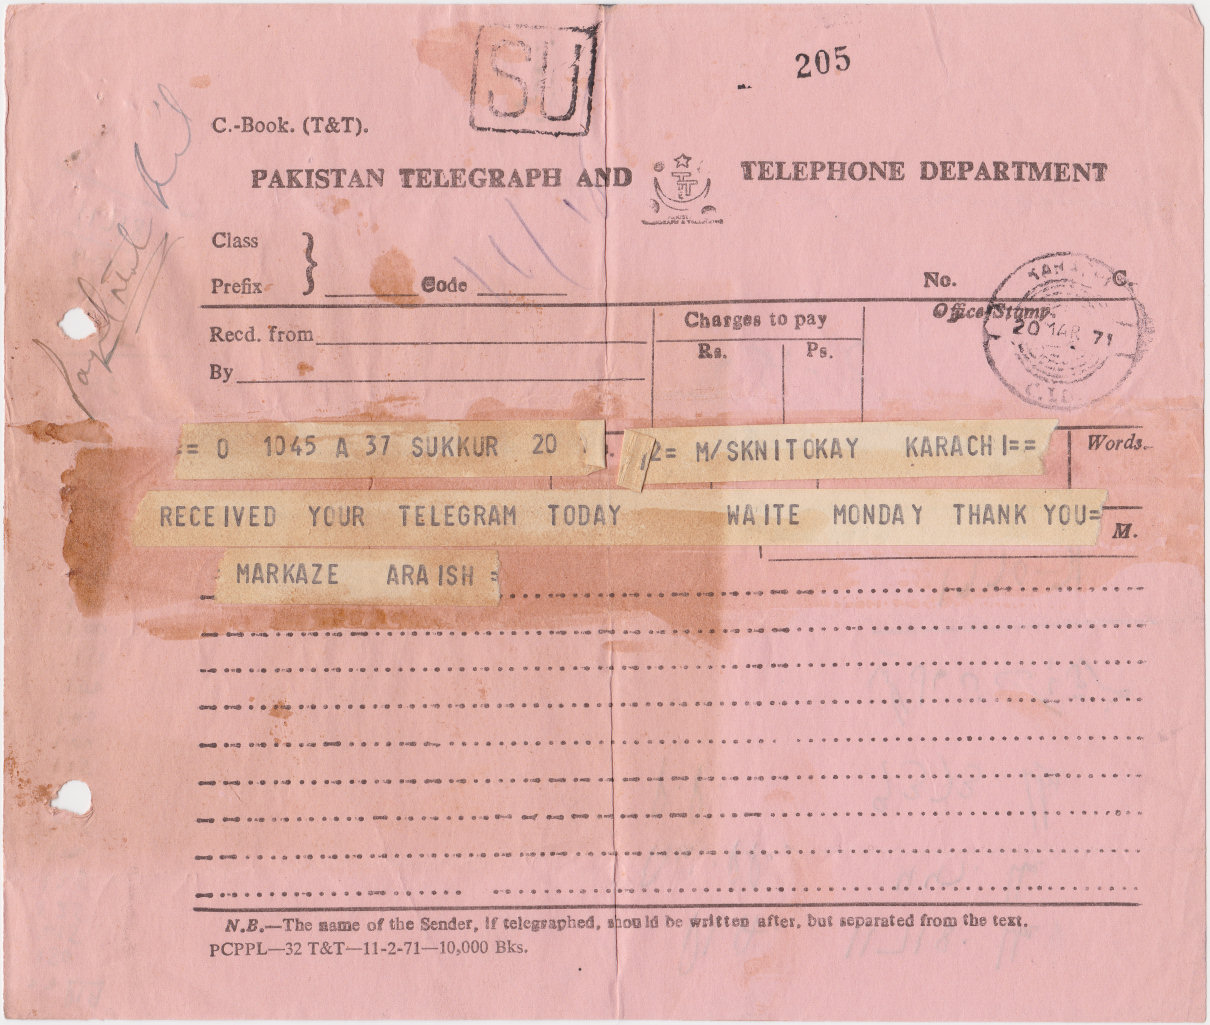 1971 Telegraph form